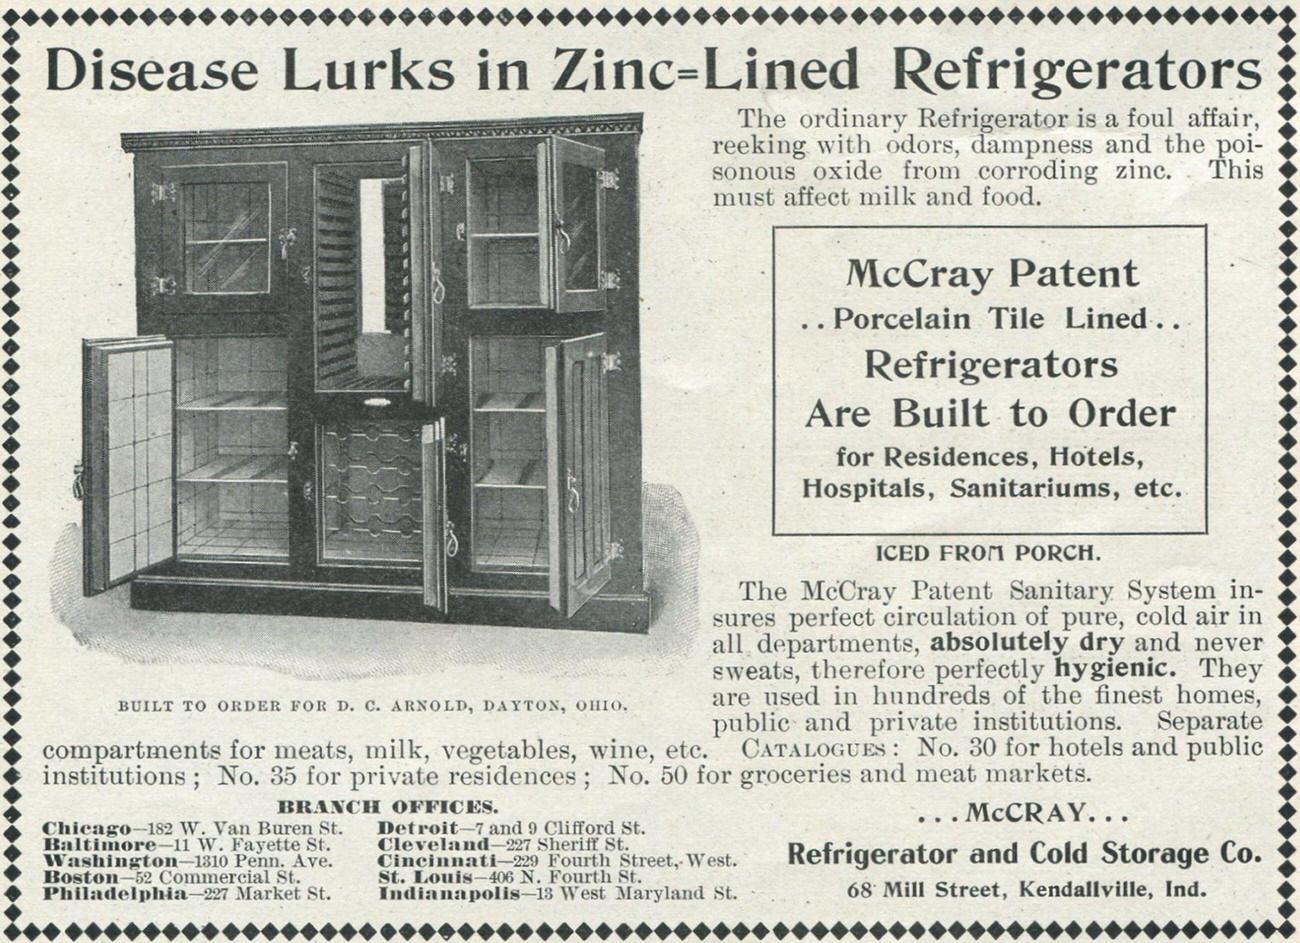 McCray porcelain tile lined refrigerators ad, 1899.